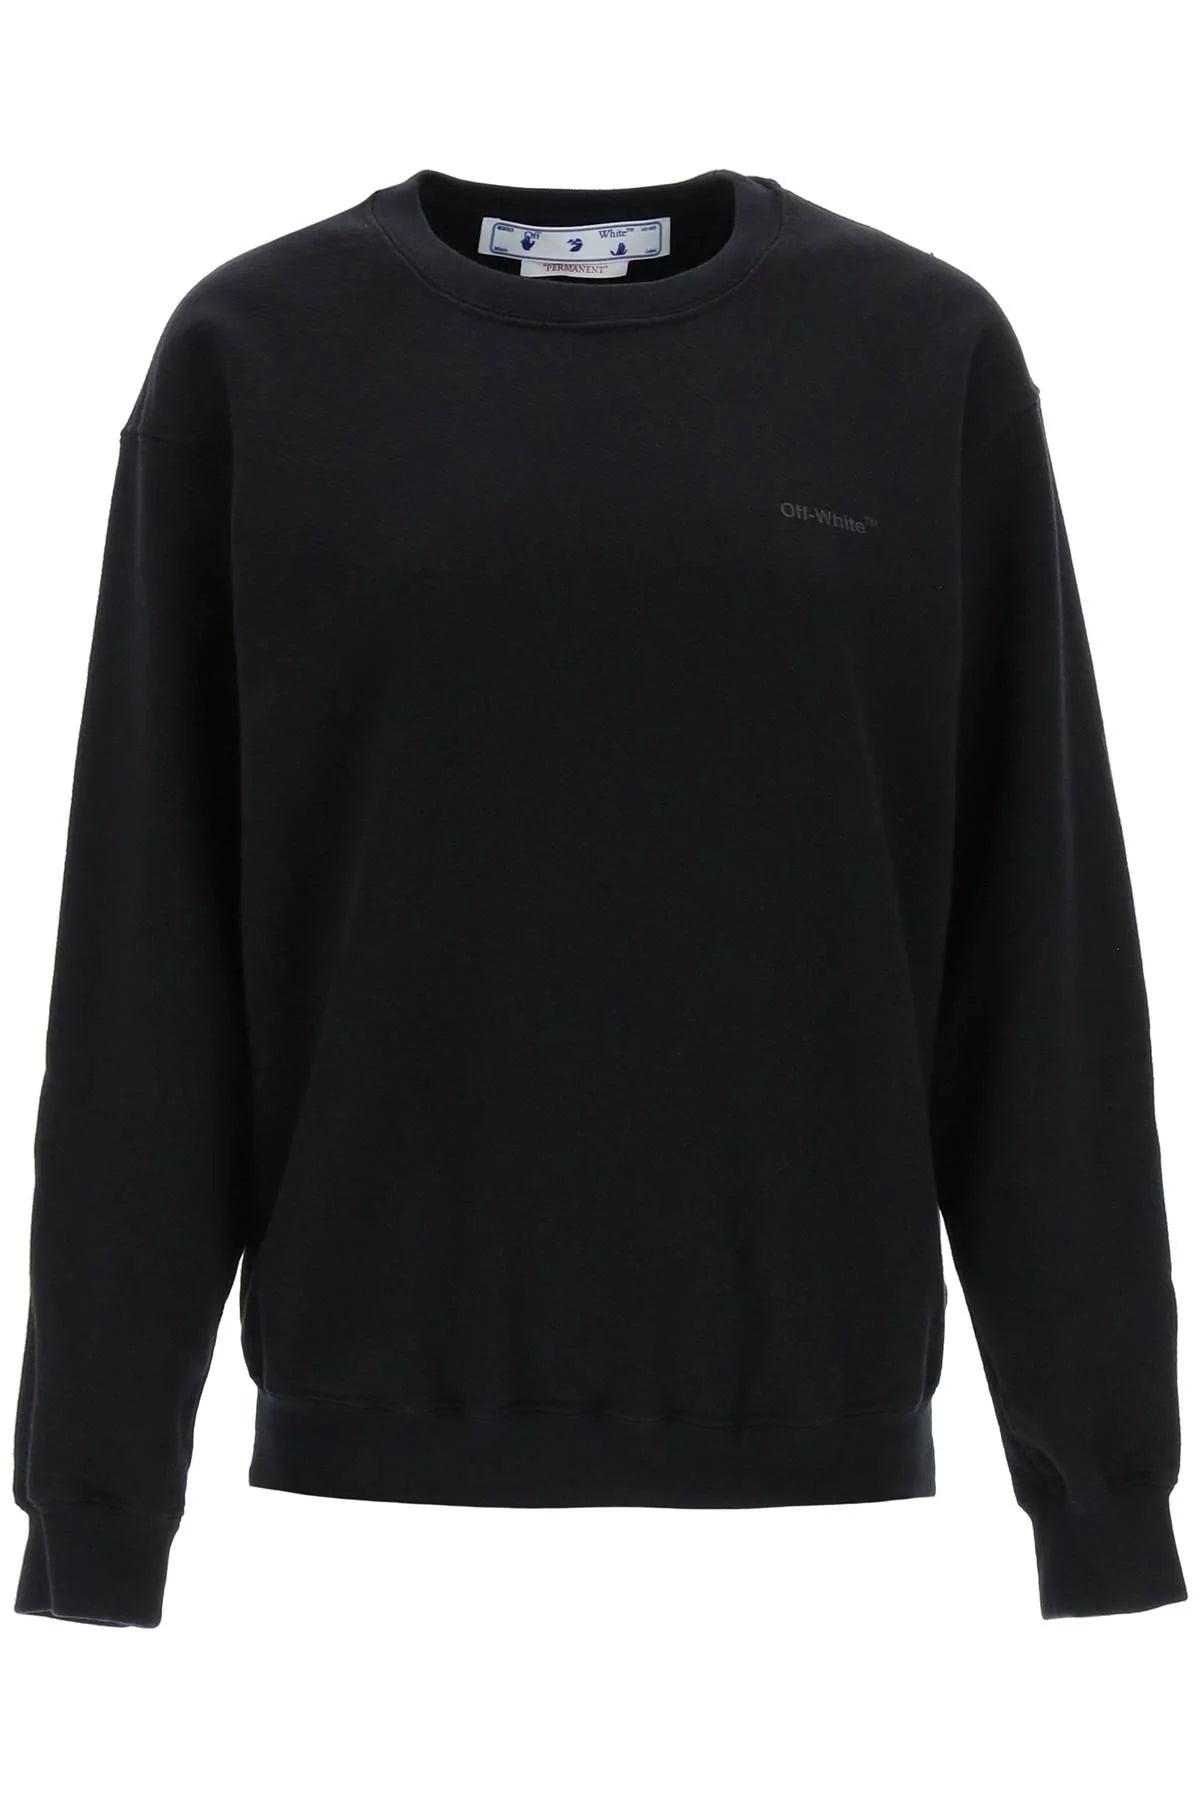 Off-White c/o Virgil Abloh 'diag' Print Crewneck Sweatshirt in Black | Lyst  UK